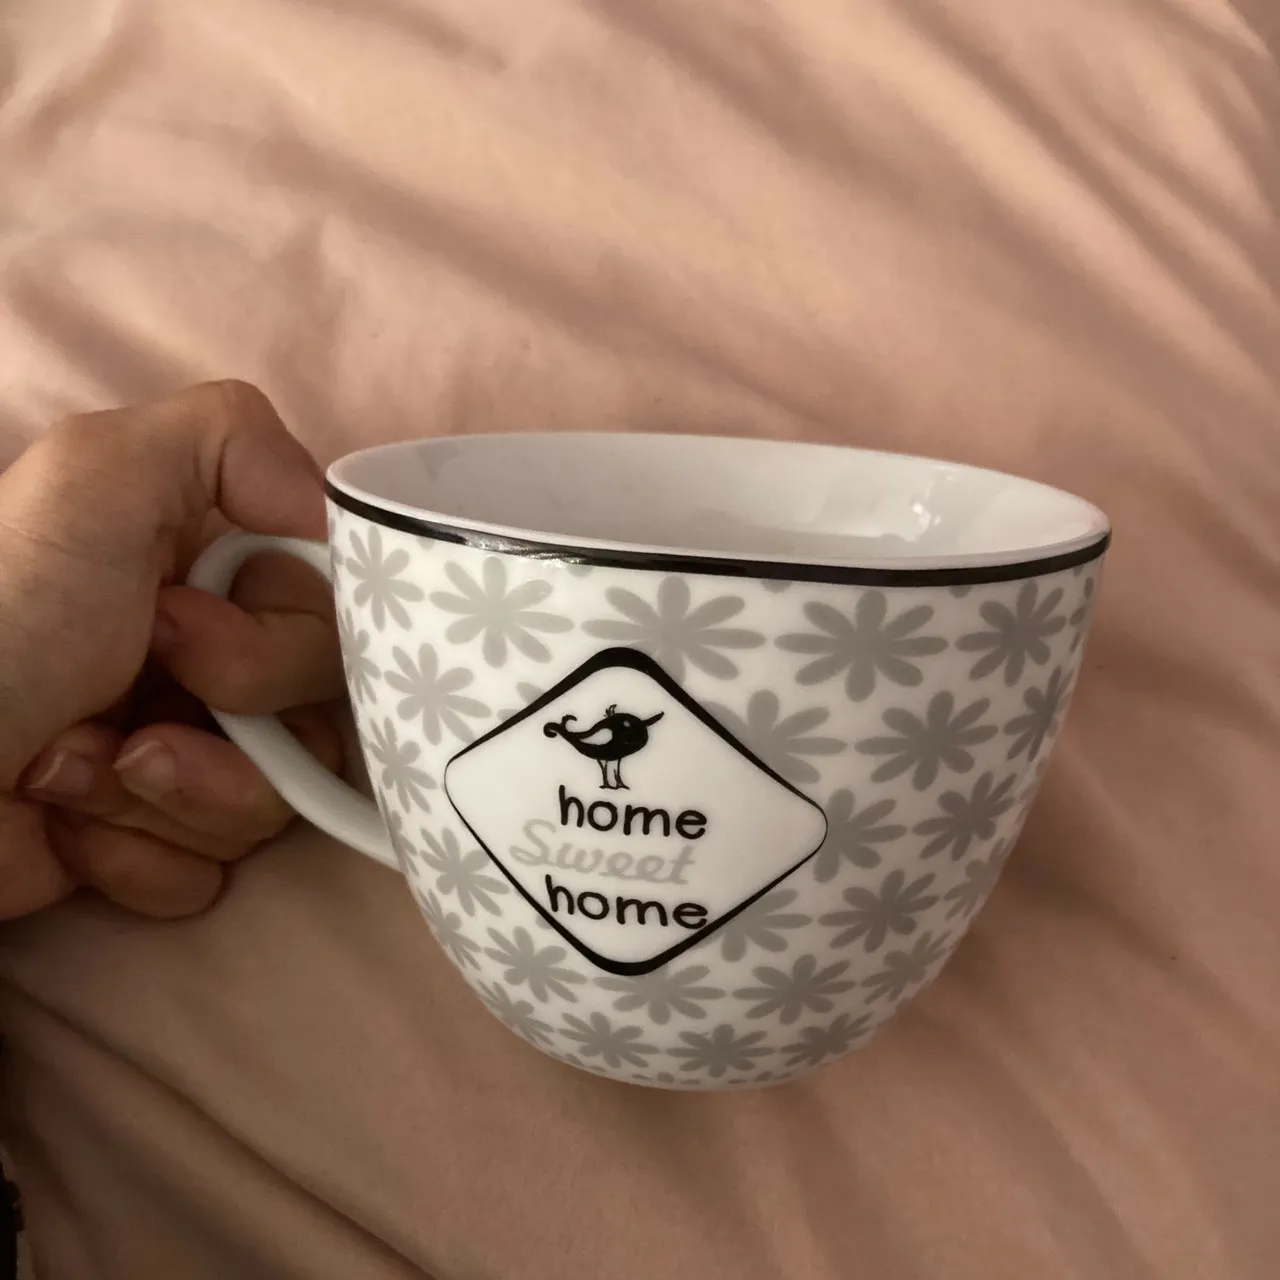 home sweet home mug photo 3